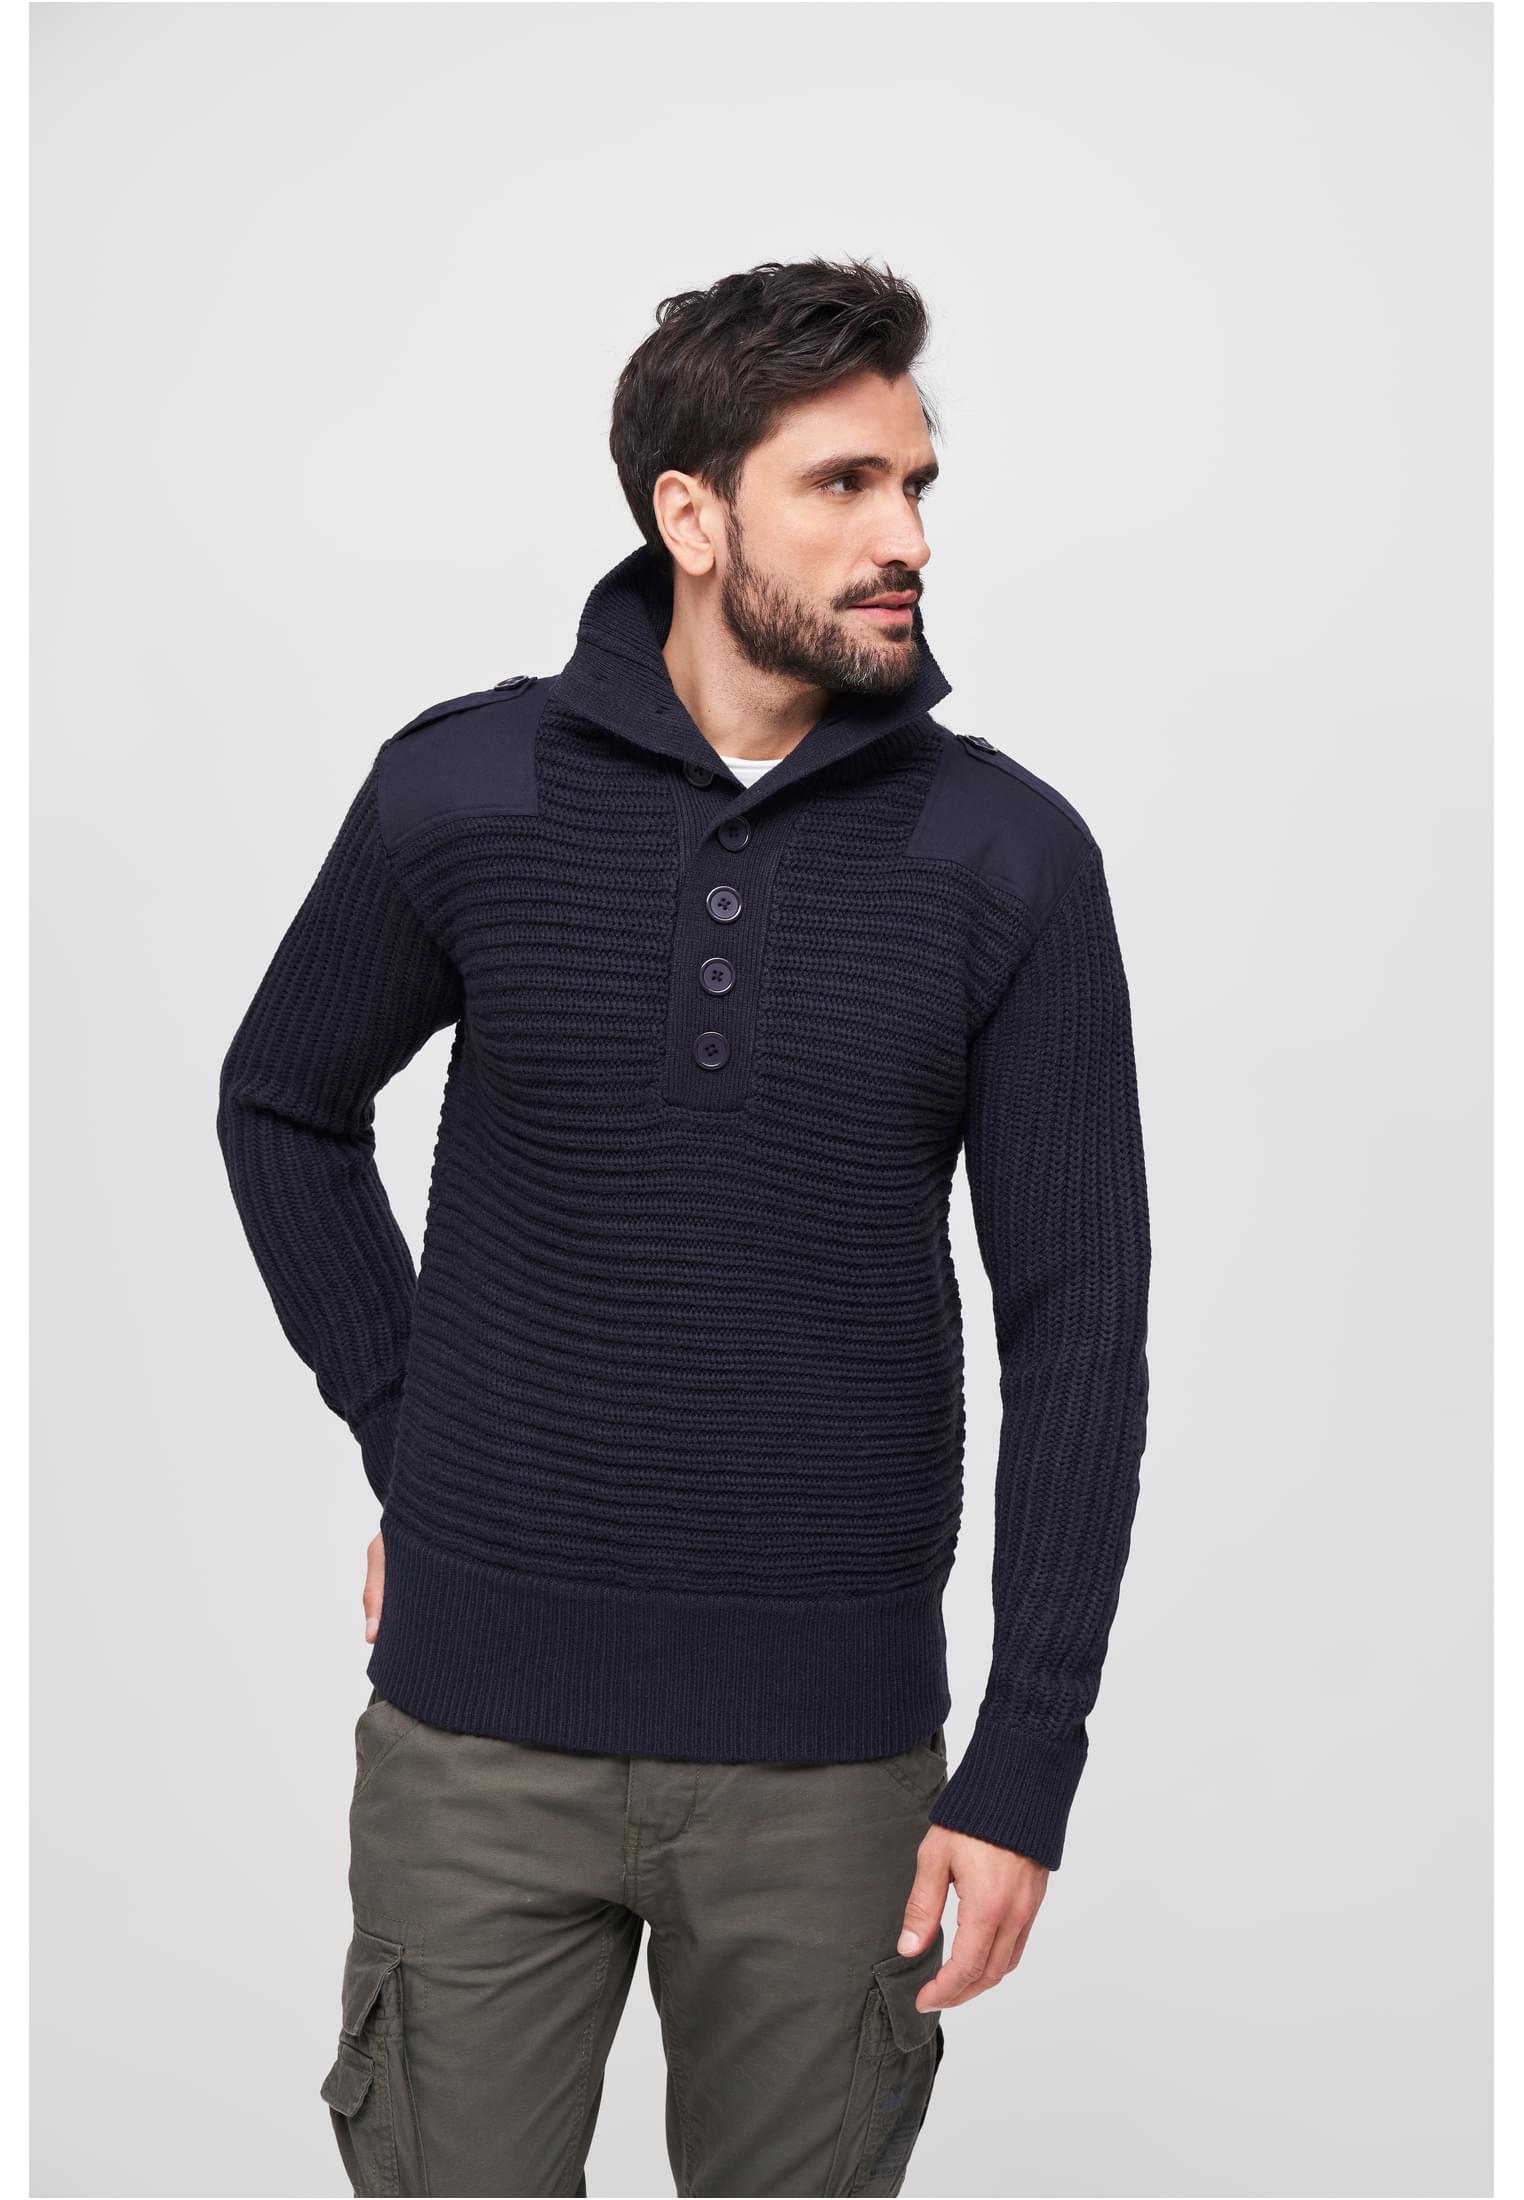 Pullover Alpin Pullover in Farbe navy